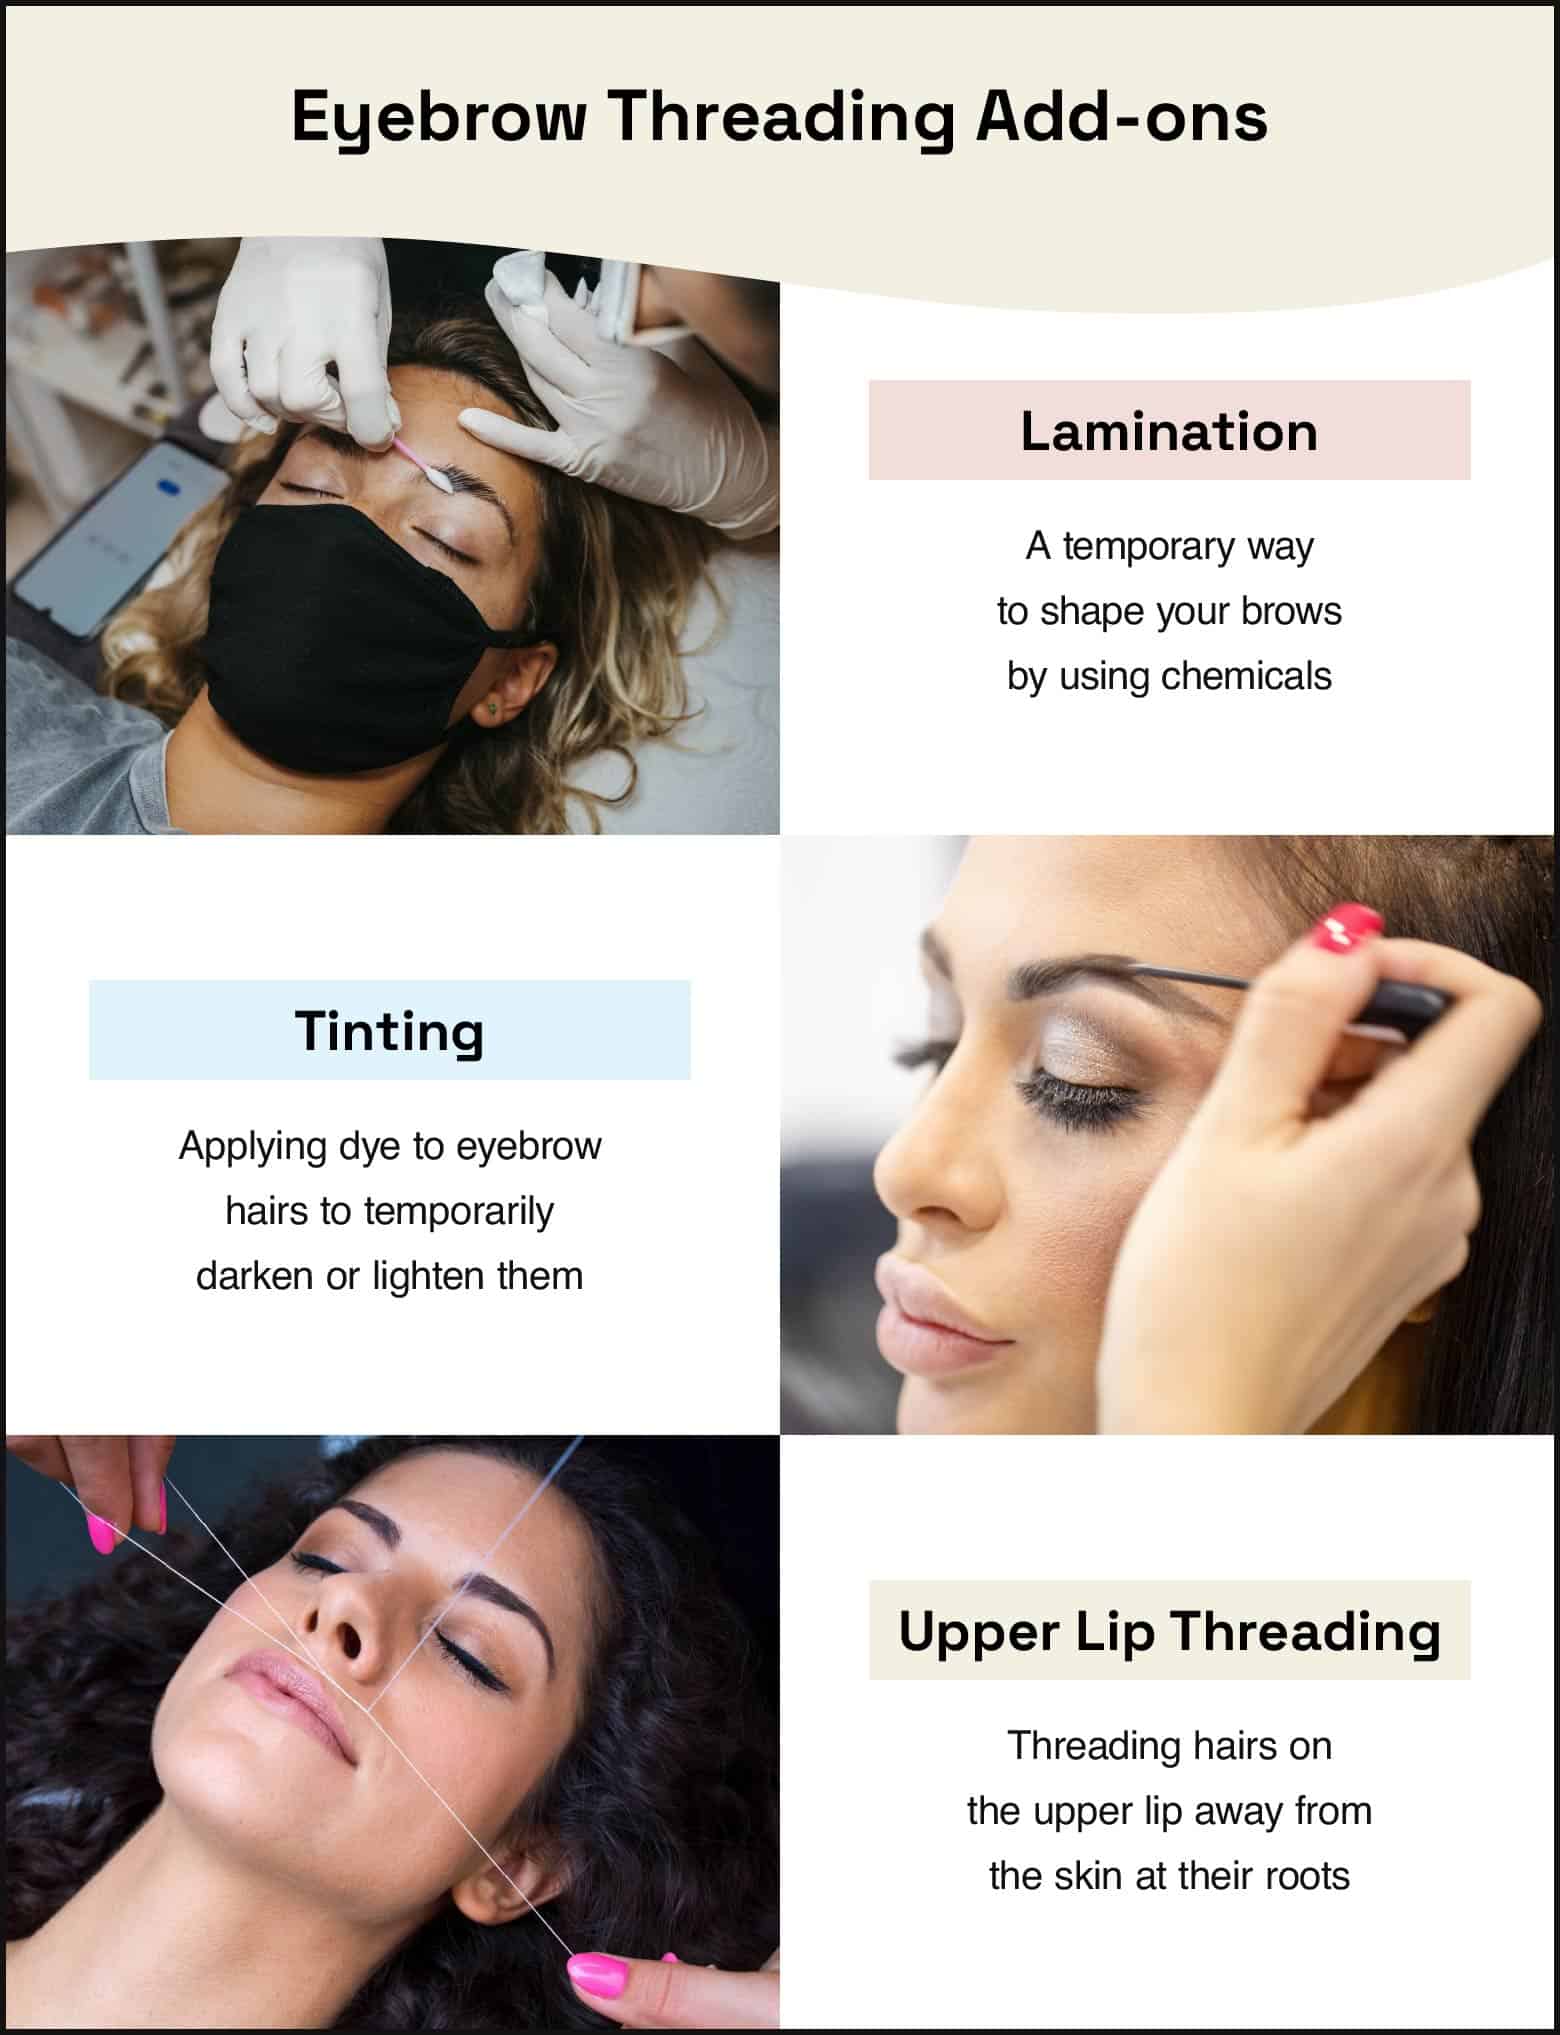 alternating photos and text summarizing eyebrow threading add-ons brow lamination, brow tinting, and upper lip threading